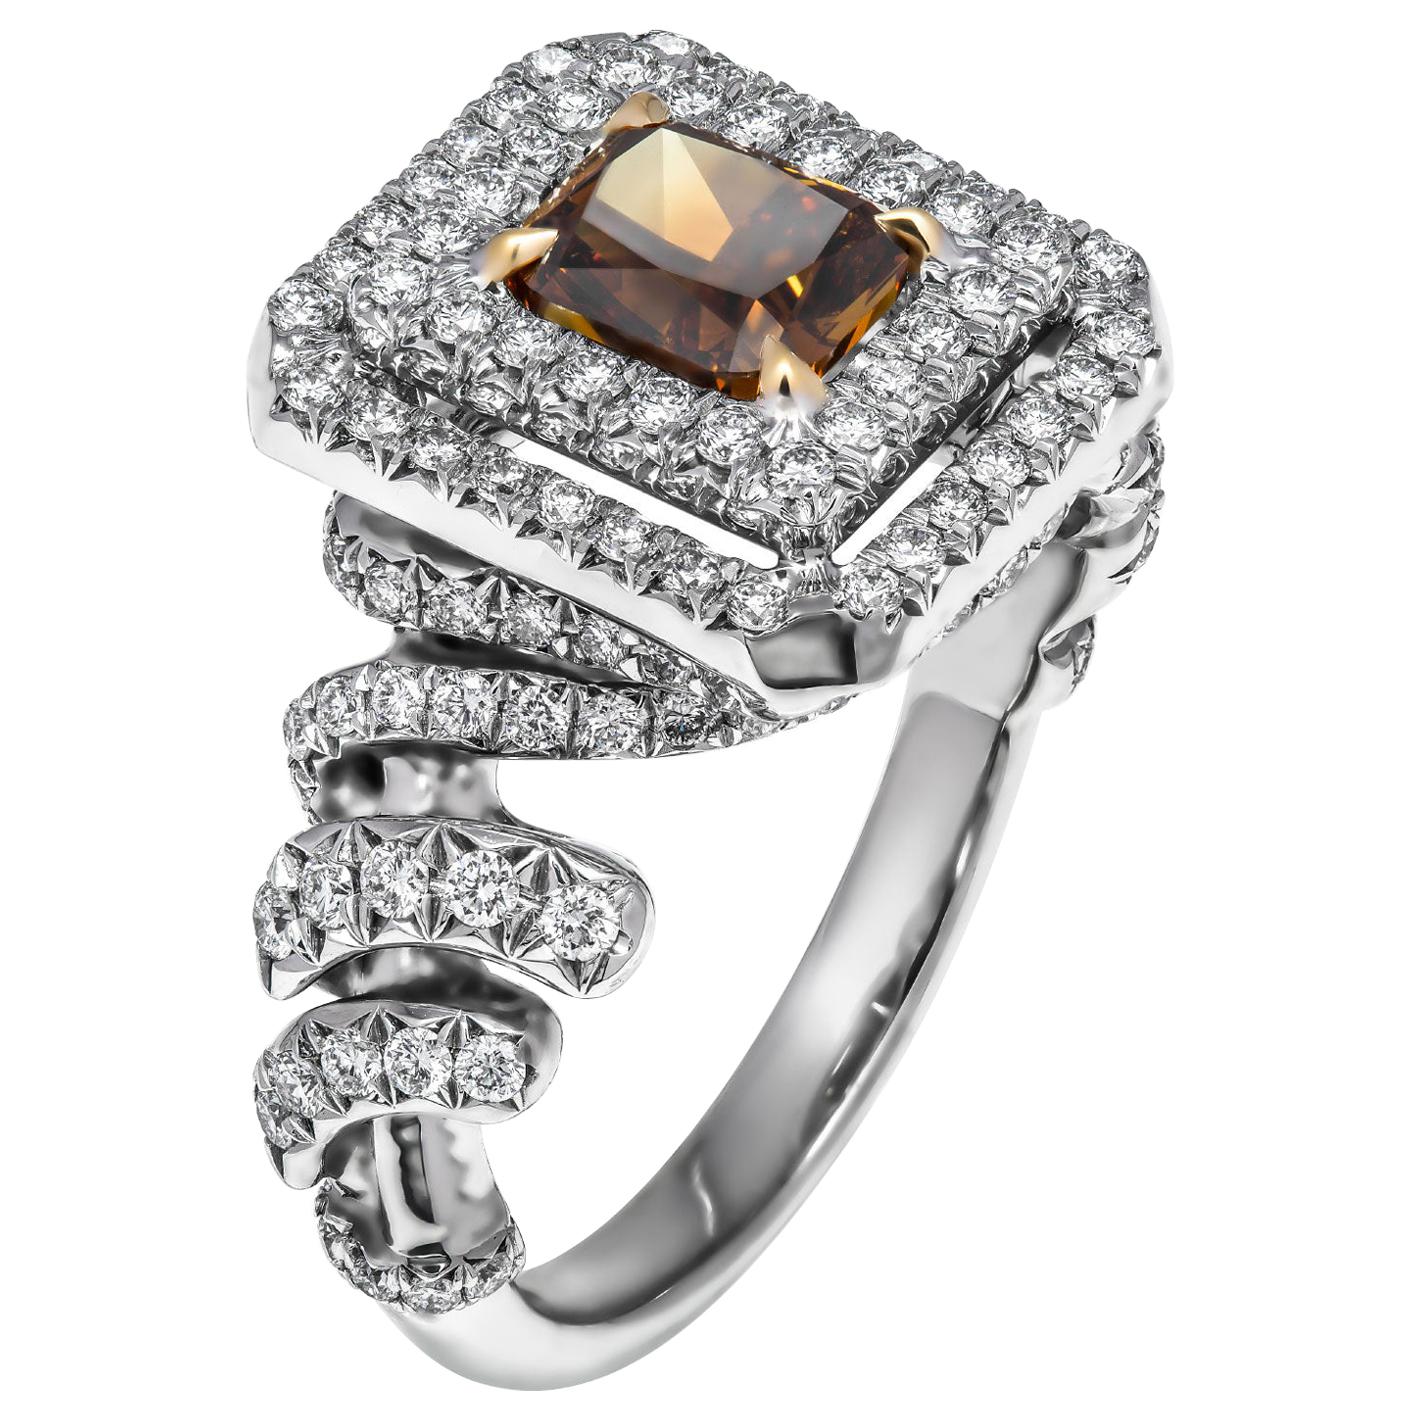 GIA Certified Cocktail Ring with 1.01 Carat Fancy Deep Orange-Brown Diamond